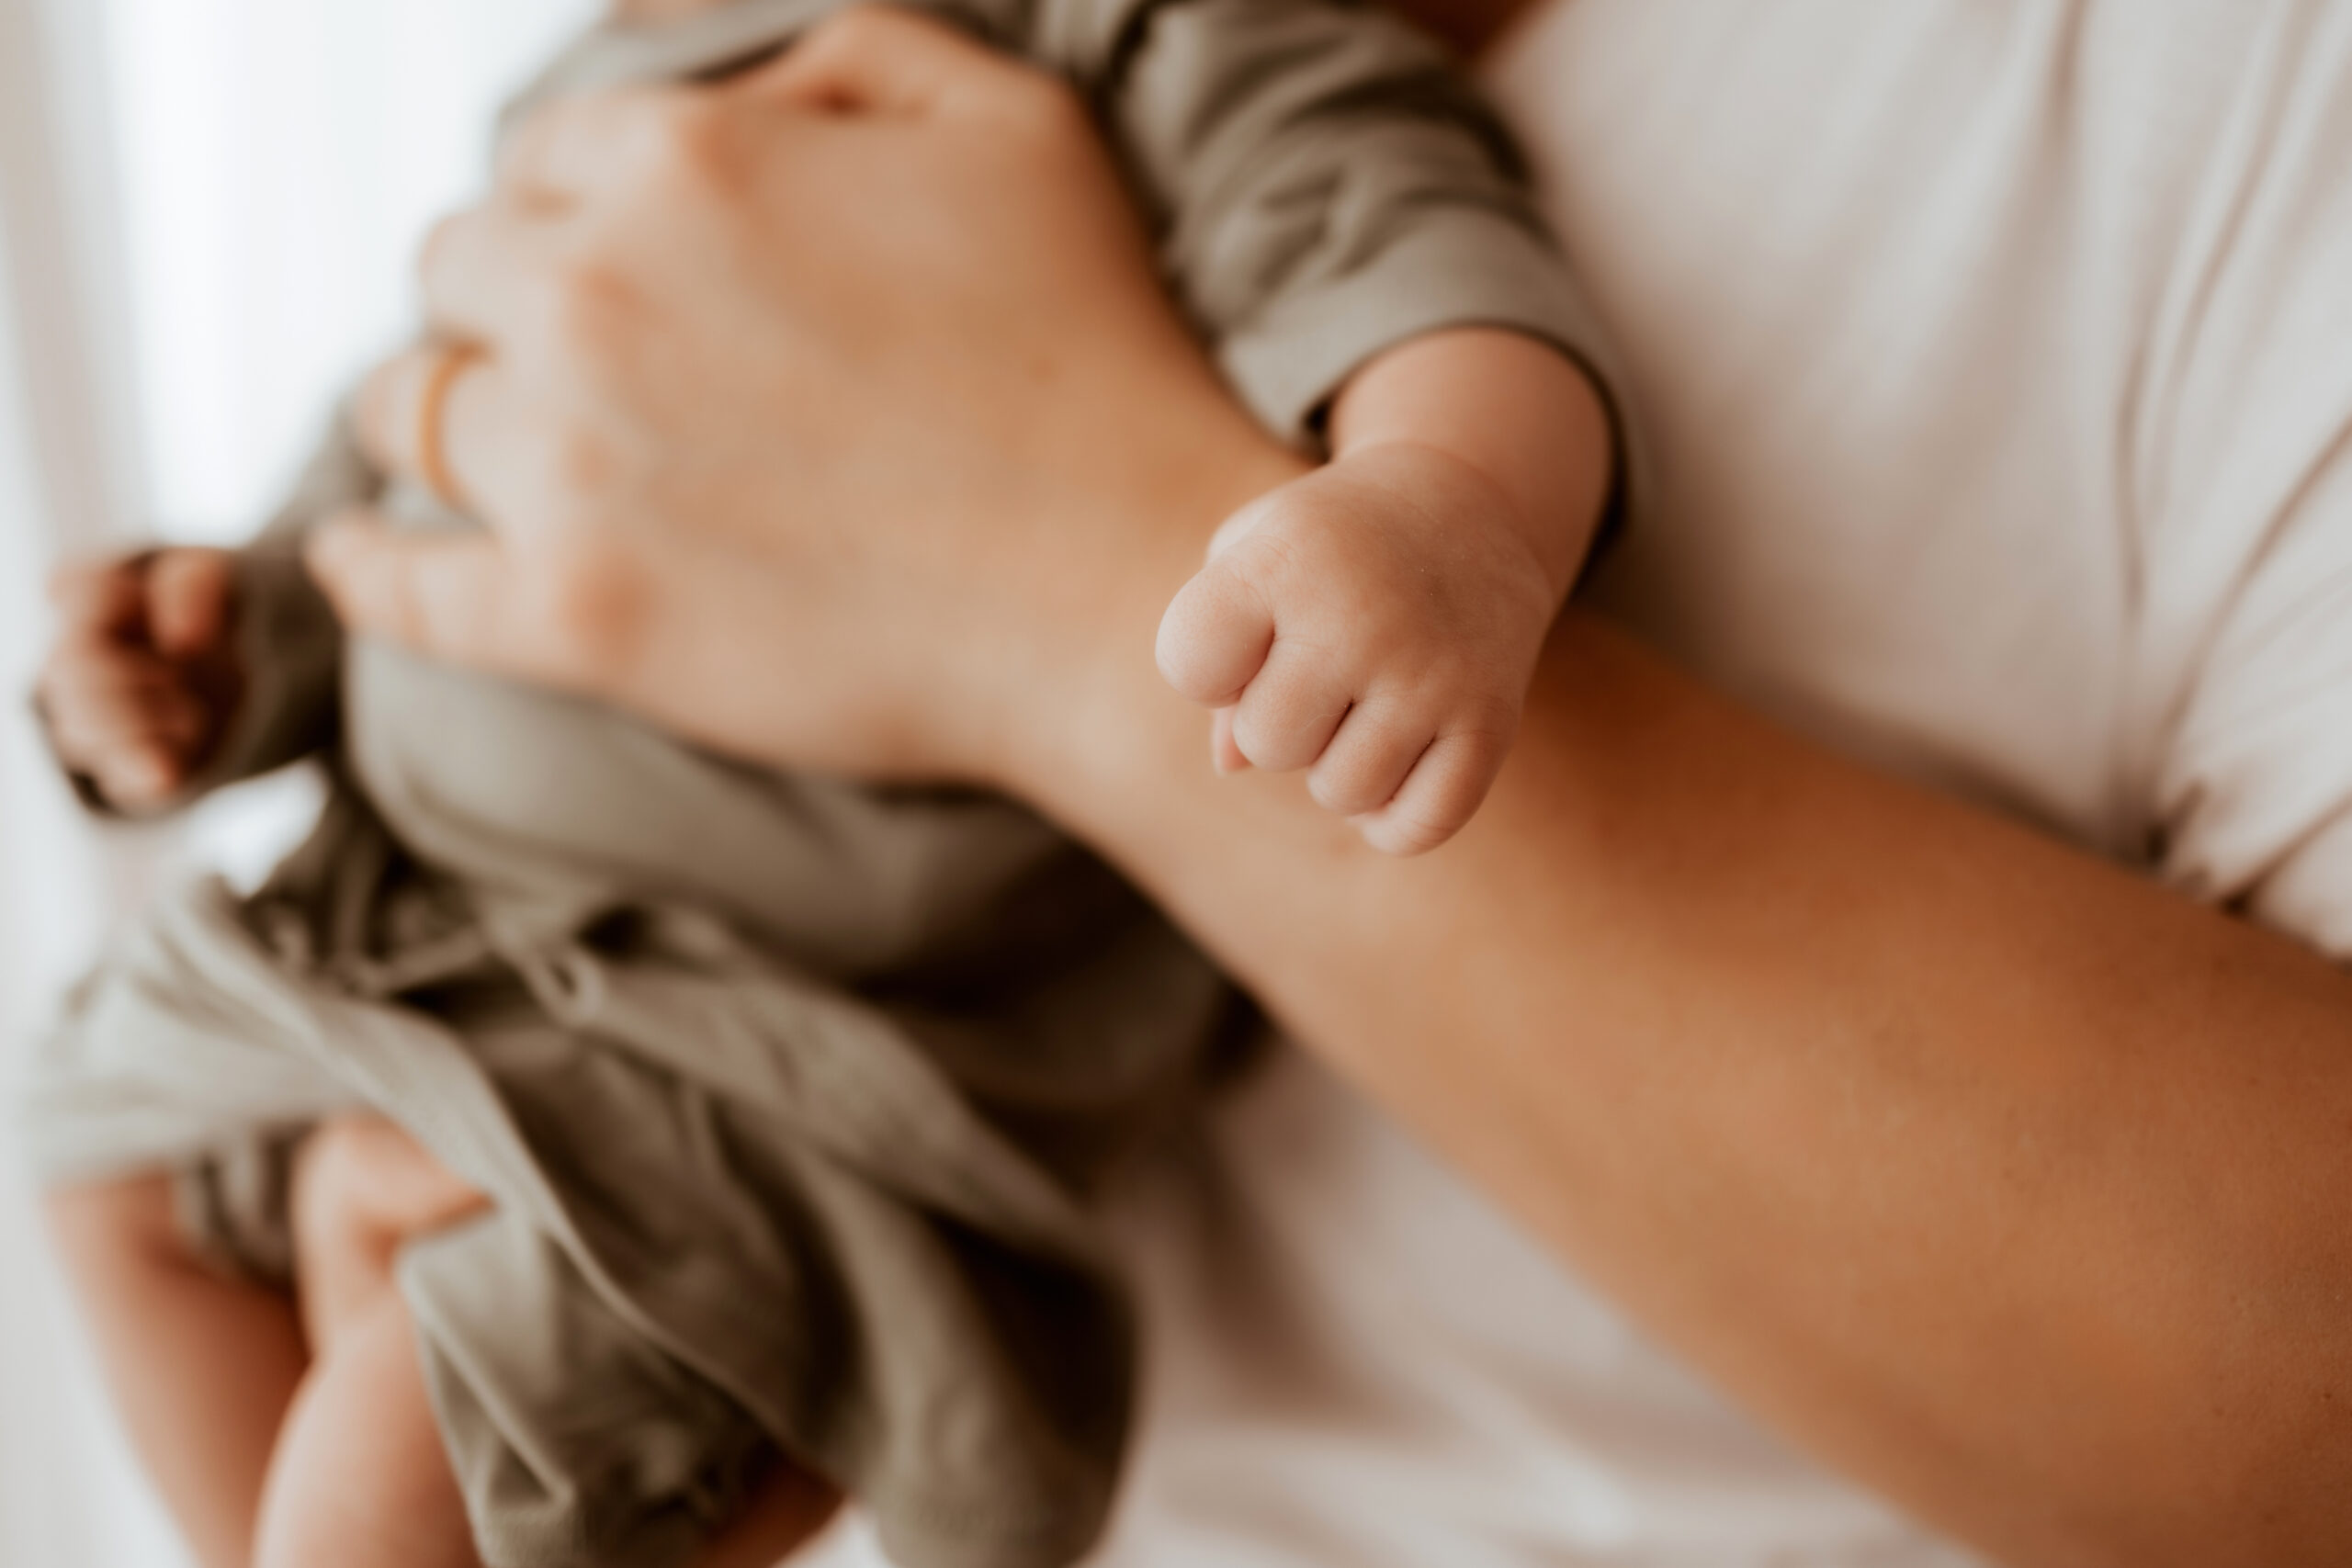 Detail photo of newborn baby girl hands wearing a sage green sleeper sack